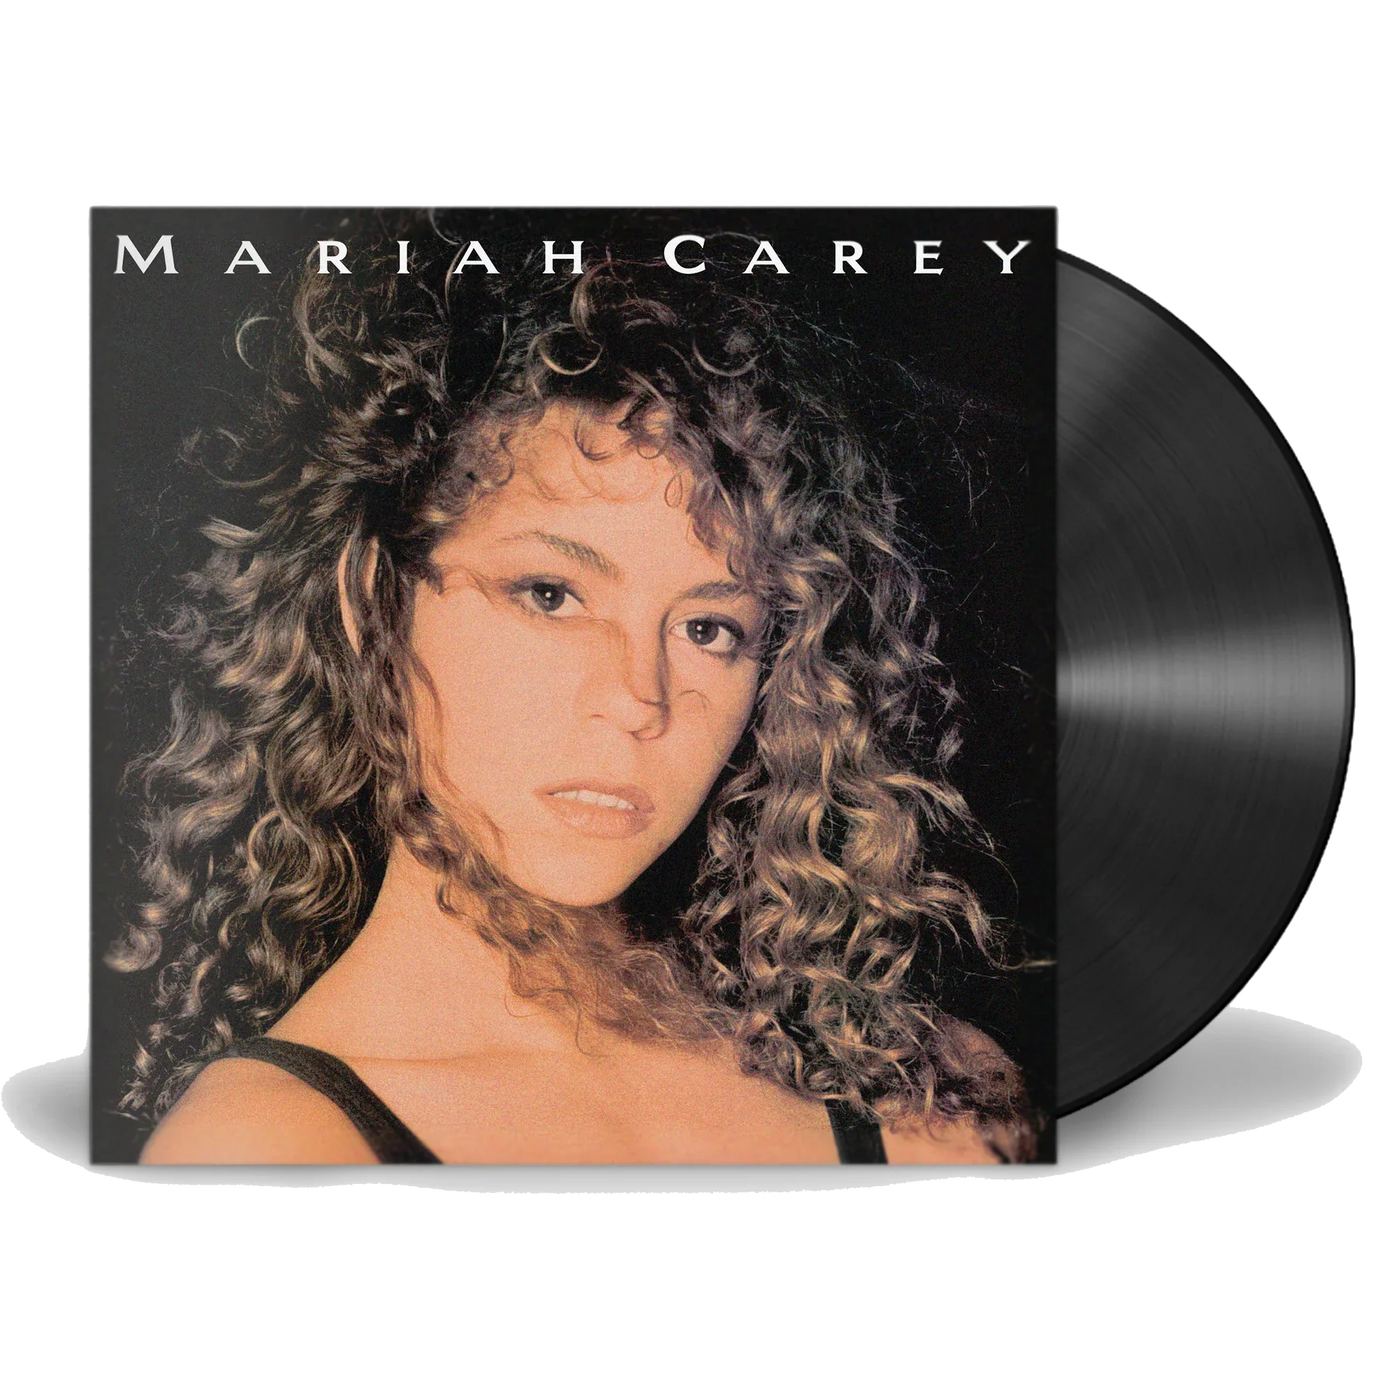 NEW/SEALED! Mariah Carey - Mariah Carey (Remastered)